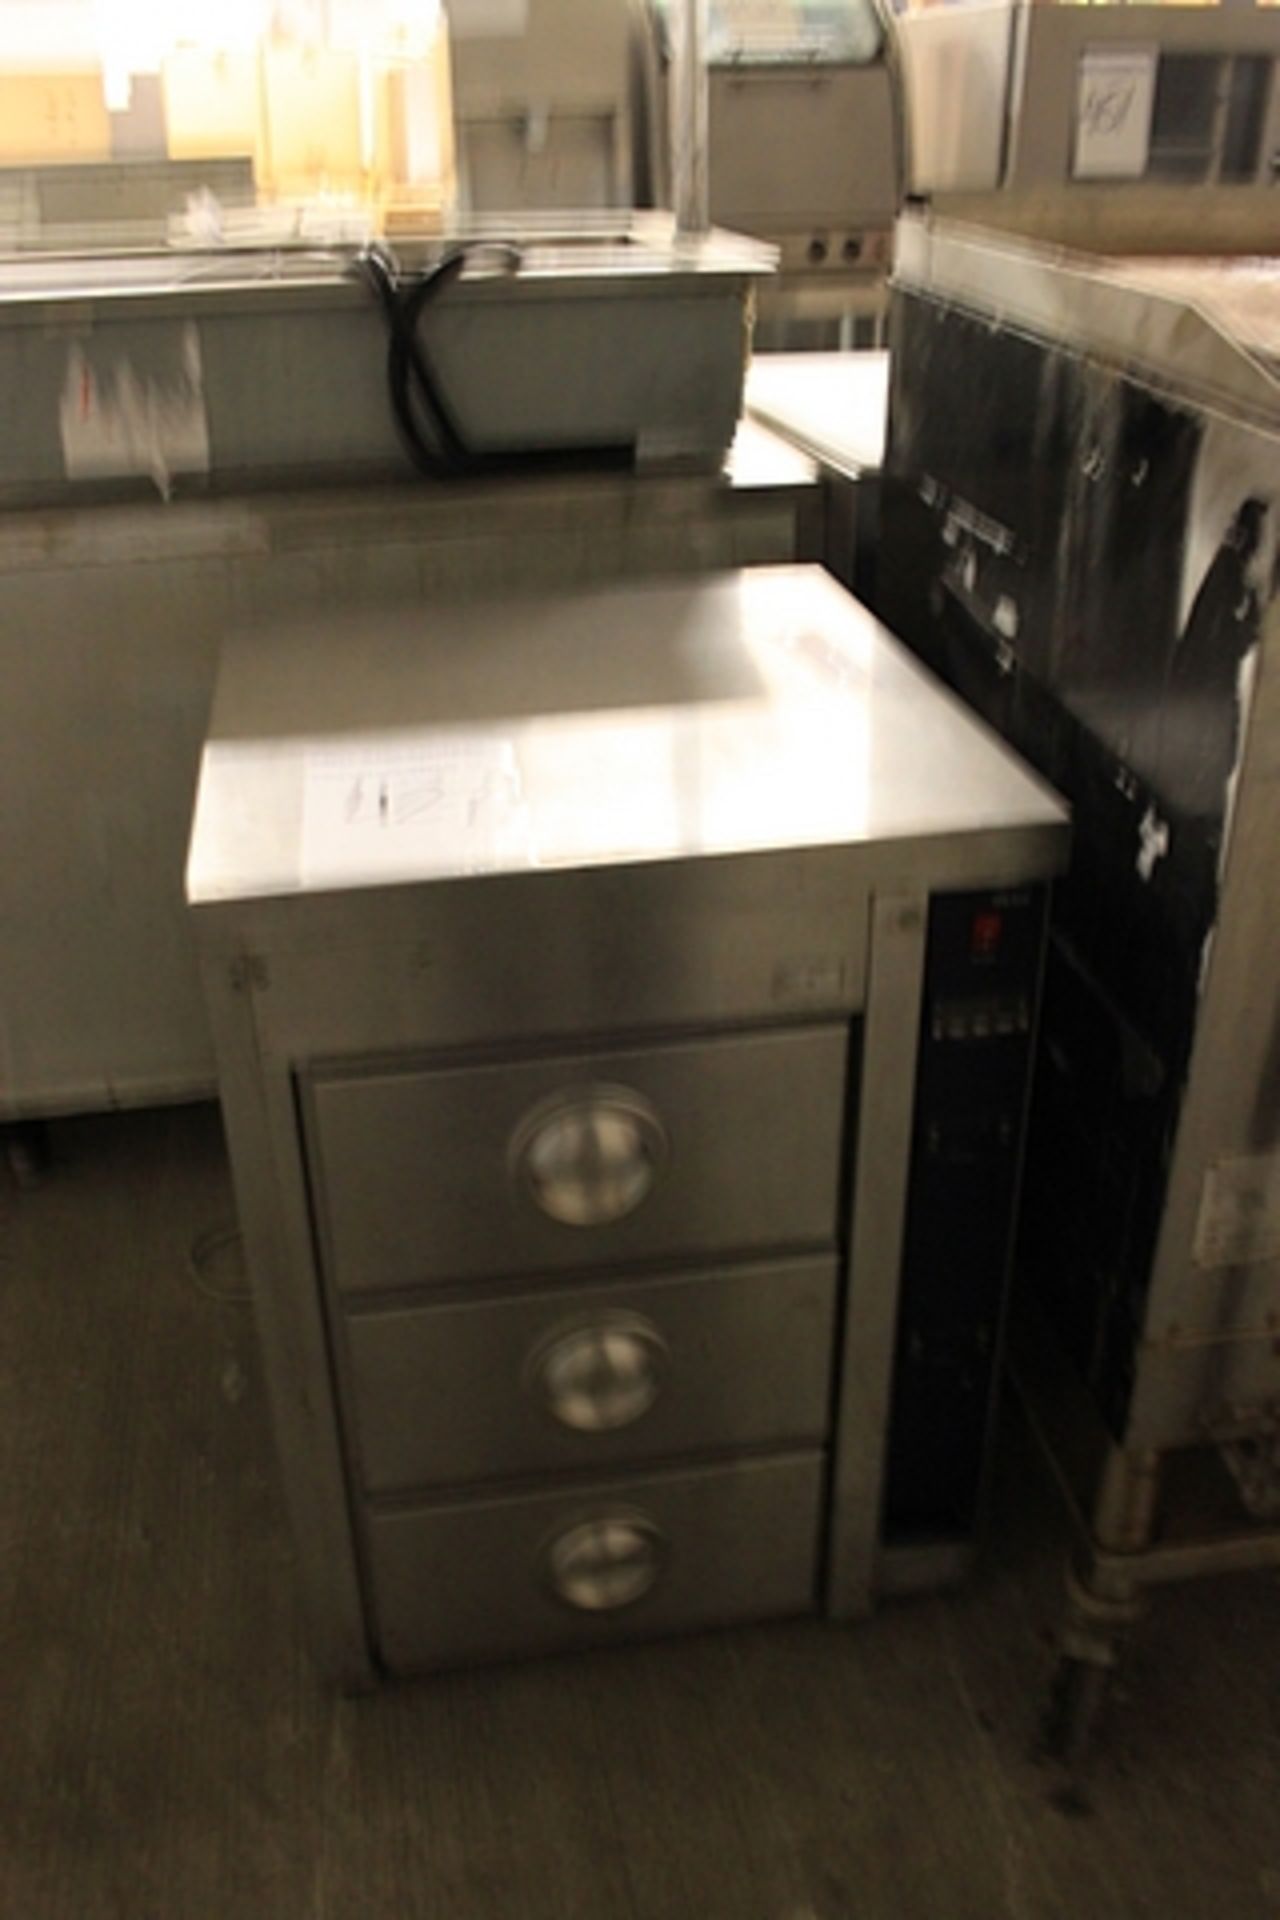 Victor Sovereign HD61-3T 3 drawer heated cabinet 220V/240V, 1 phase, 50 Hz, 1kW loading, 4.5 Amps